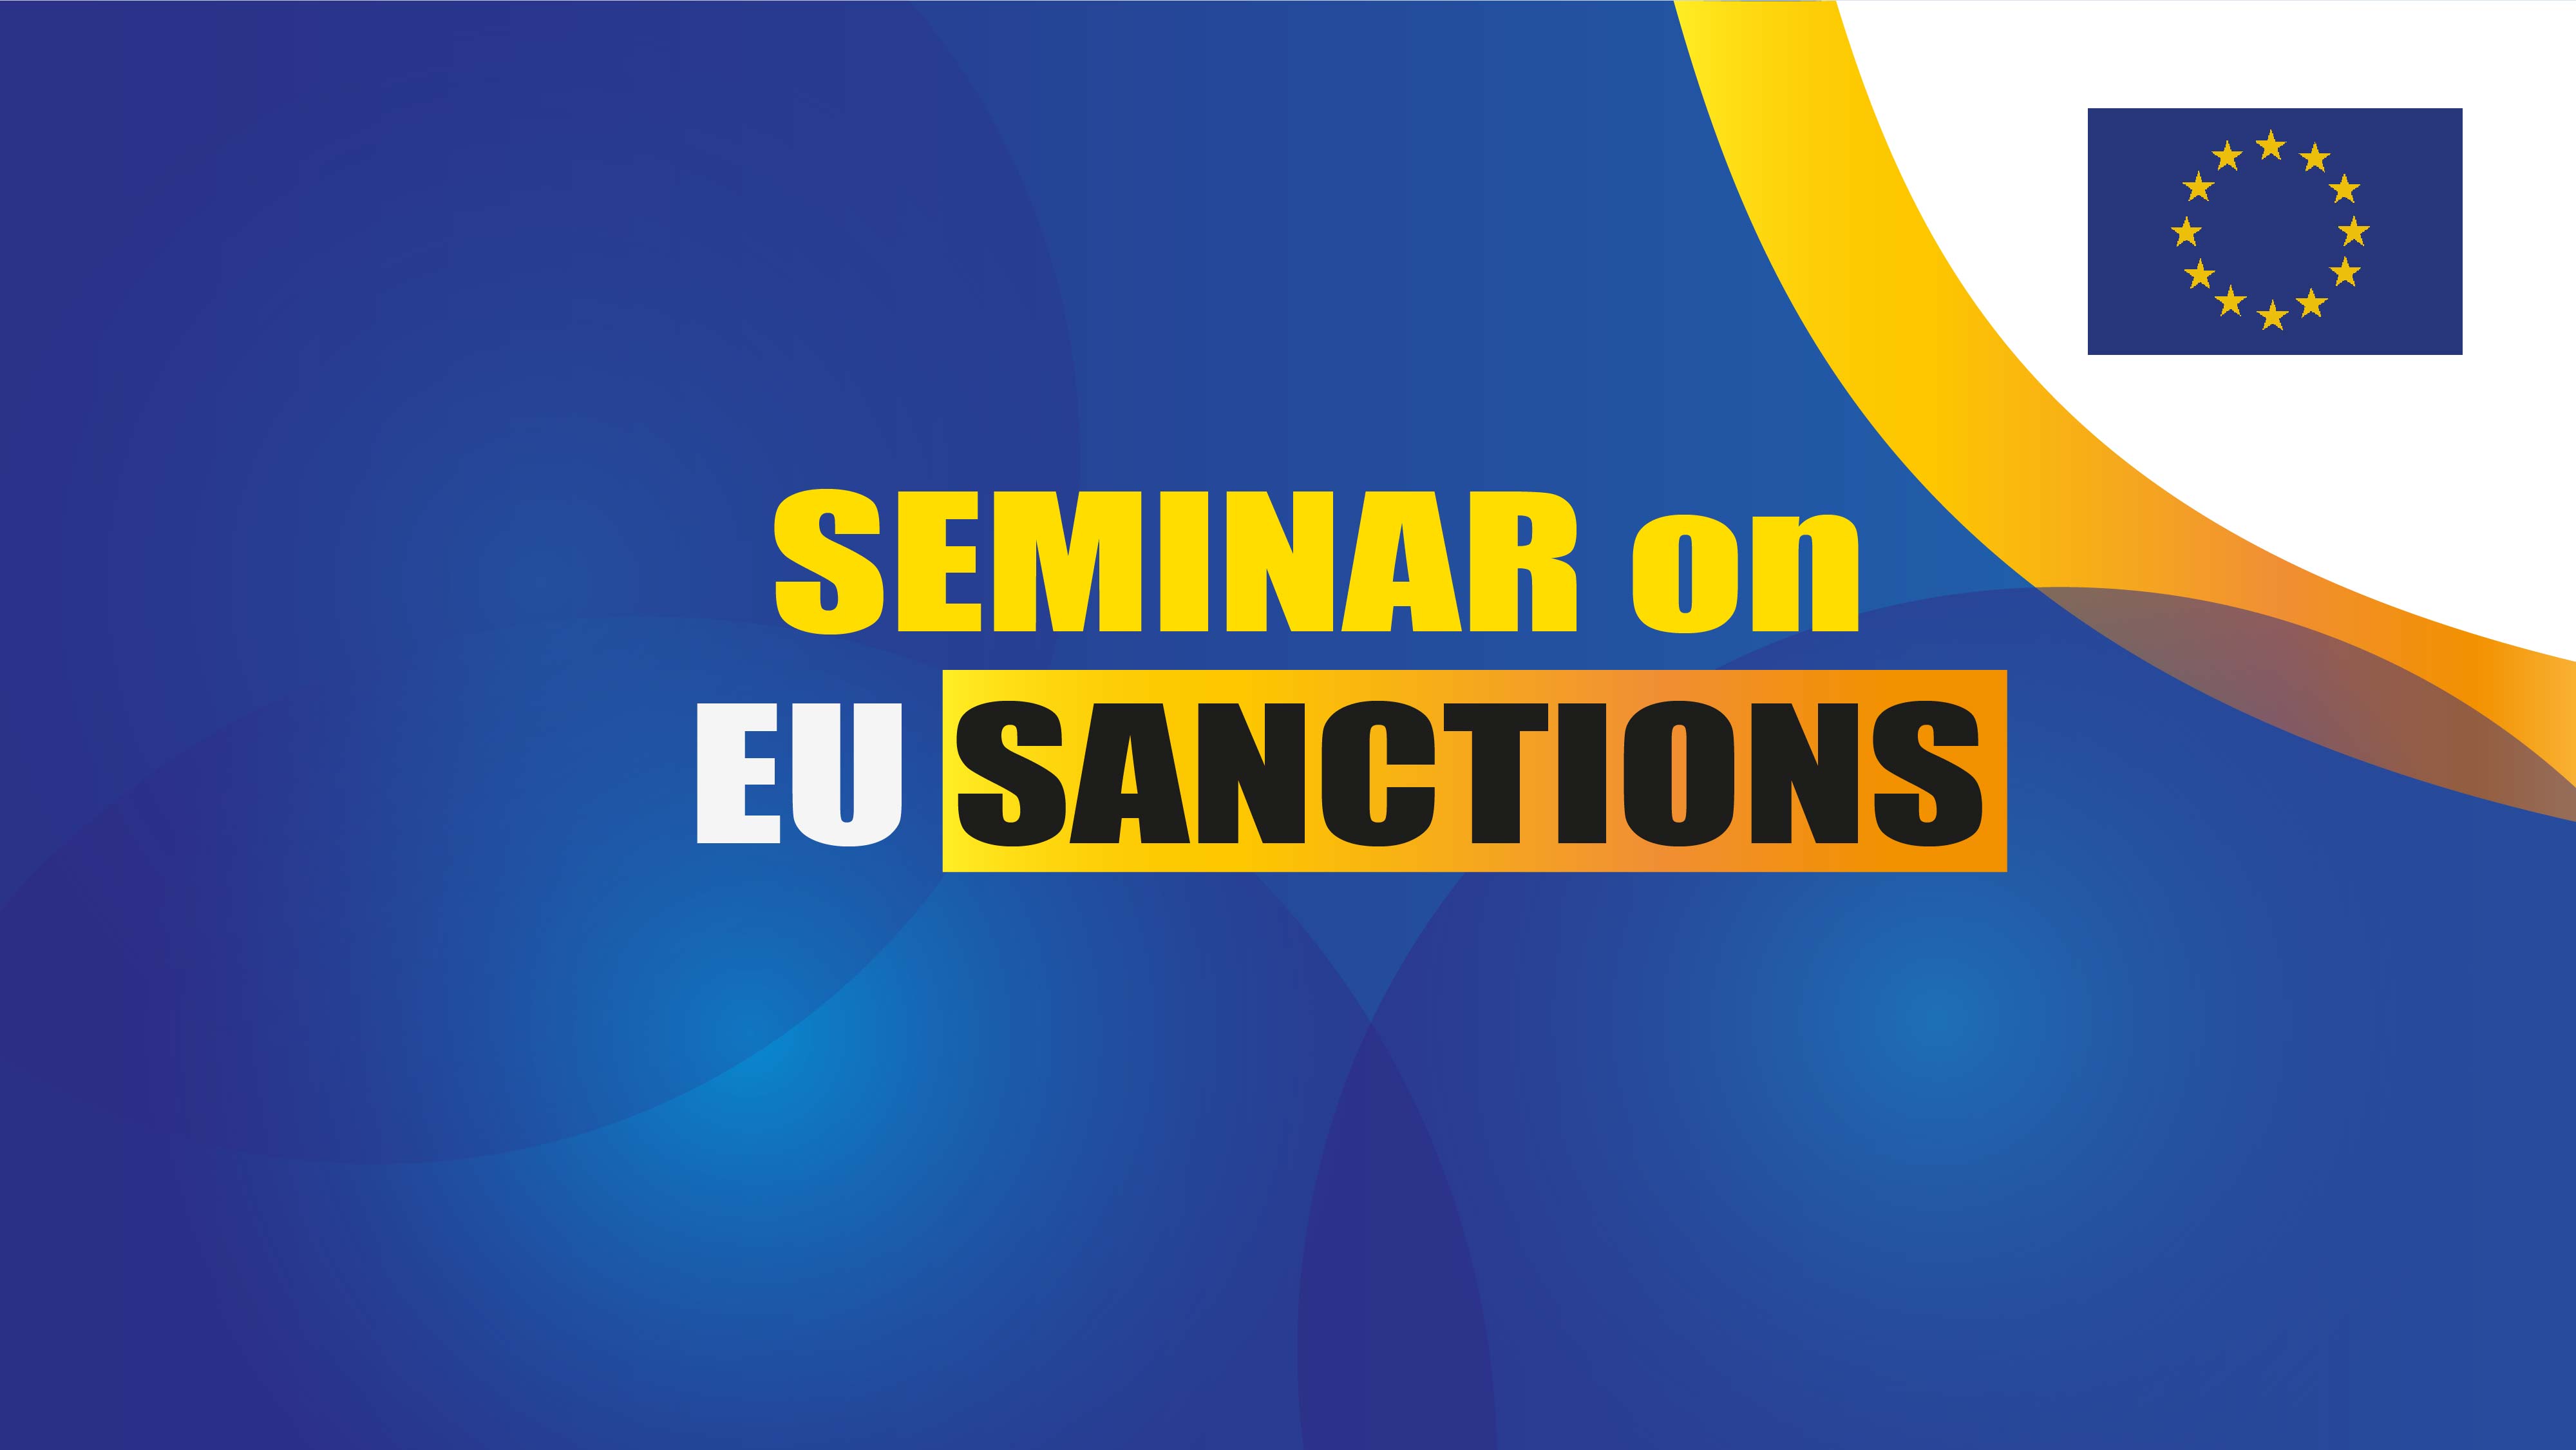 ISTC and European Union organised a training workshop in Istanbul, Turkey on EU sanctions